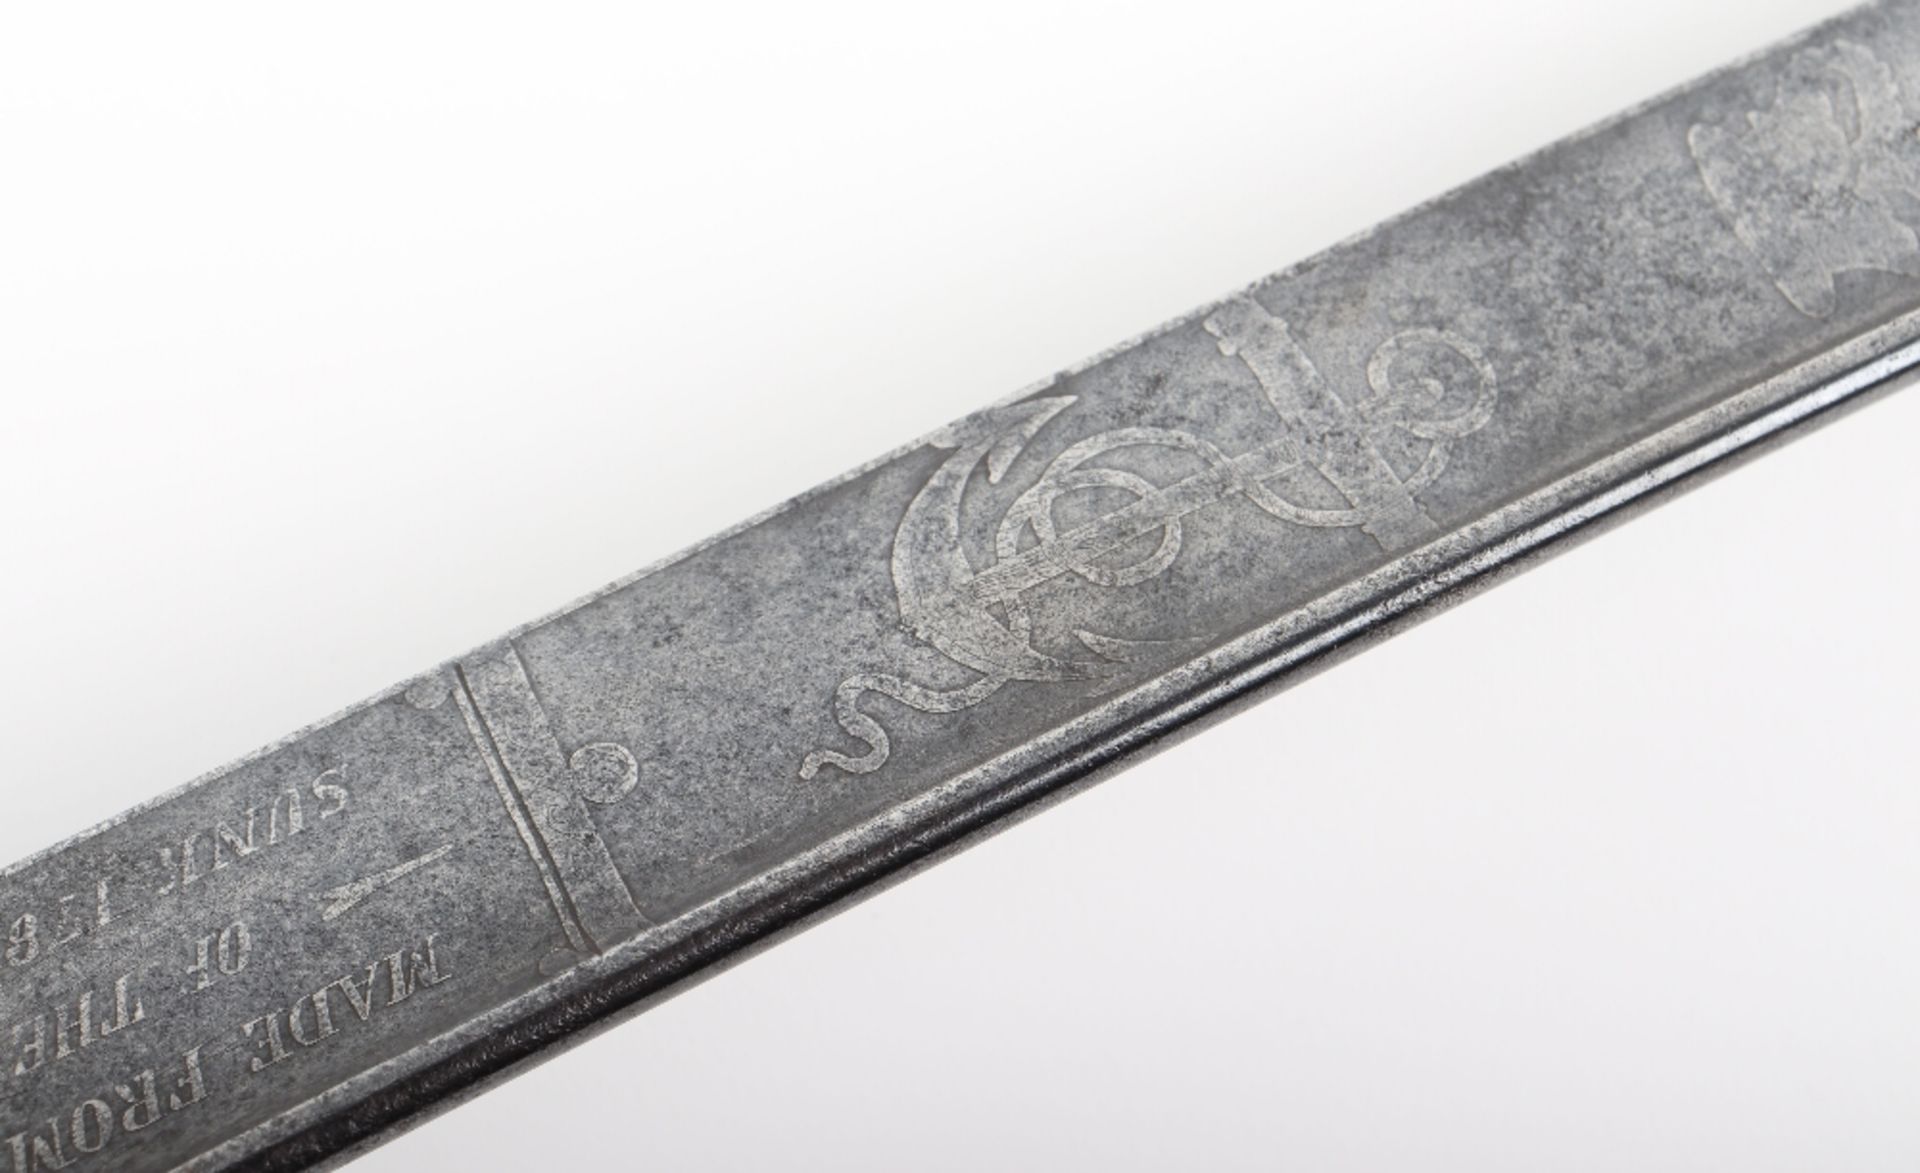 Historically Interesting Royal Navy Officer’s Presentation Sword c.1850 - Image 12 of 18